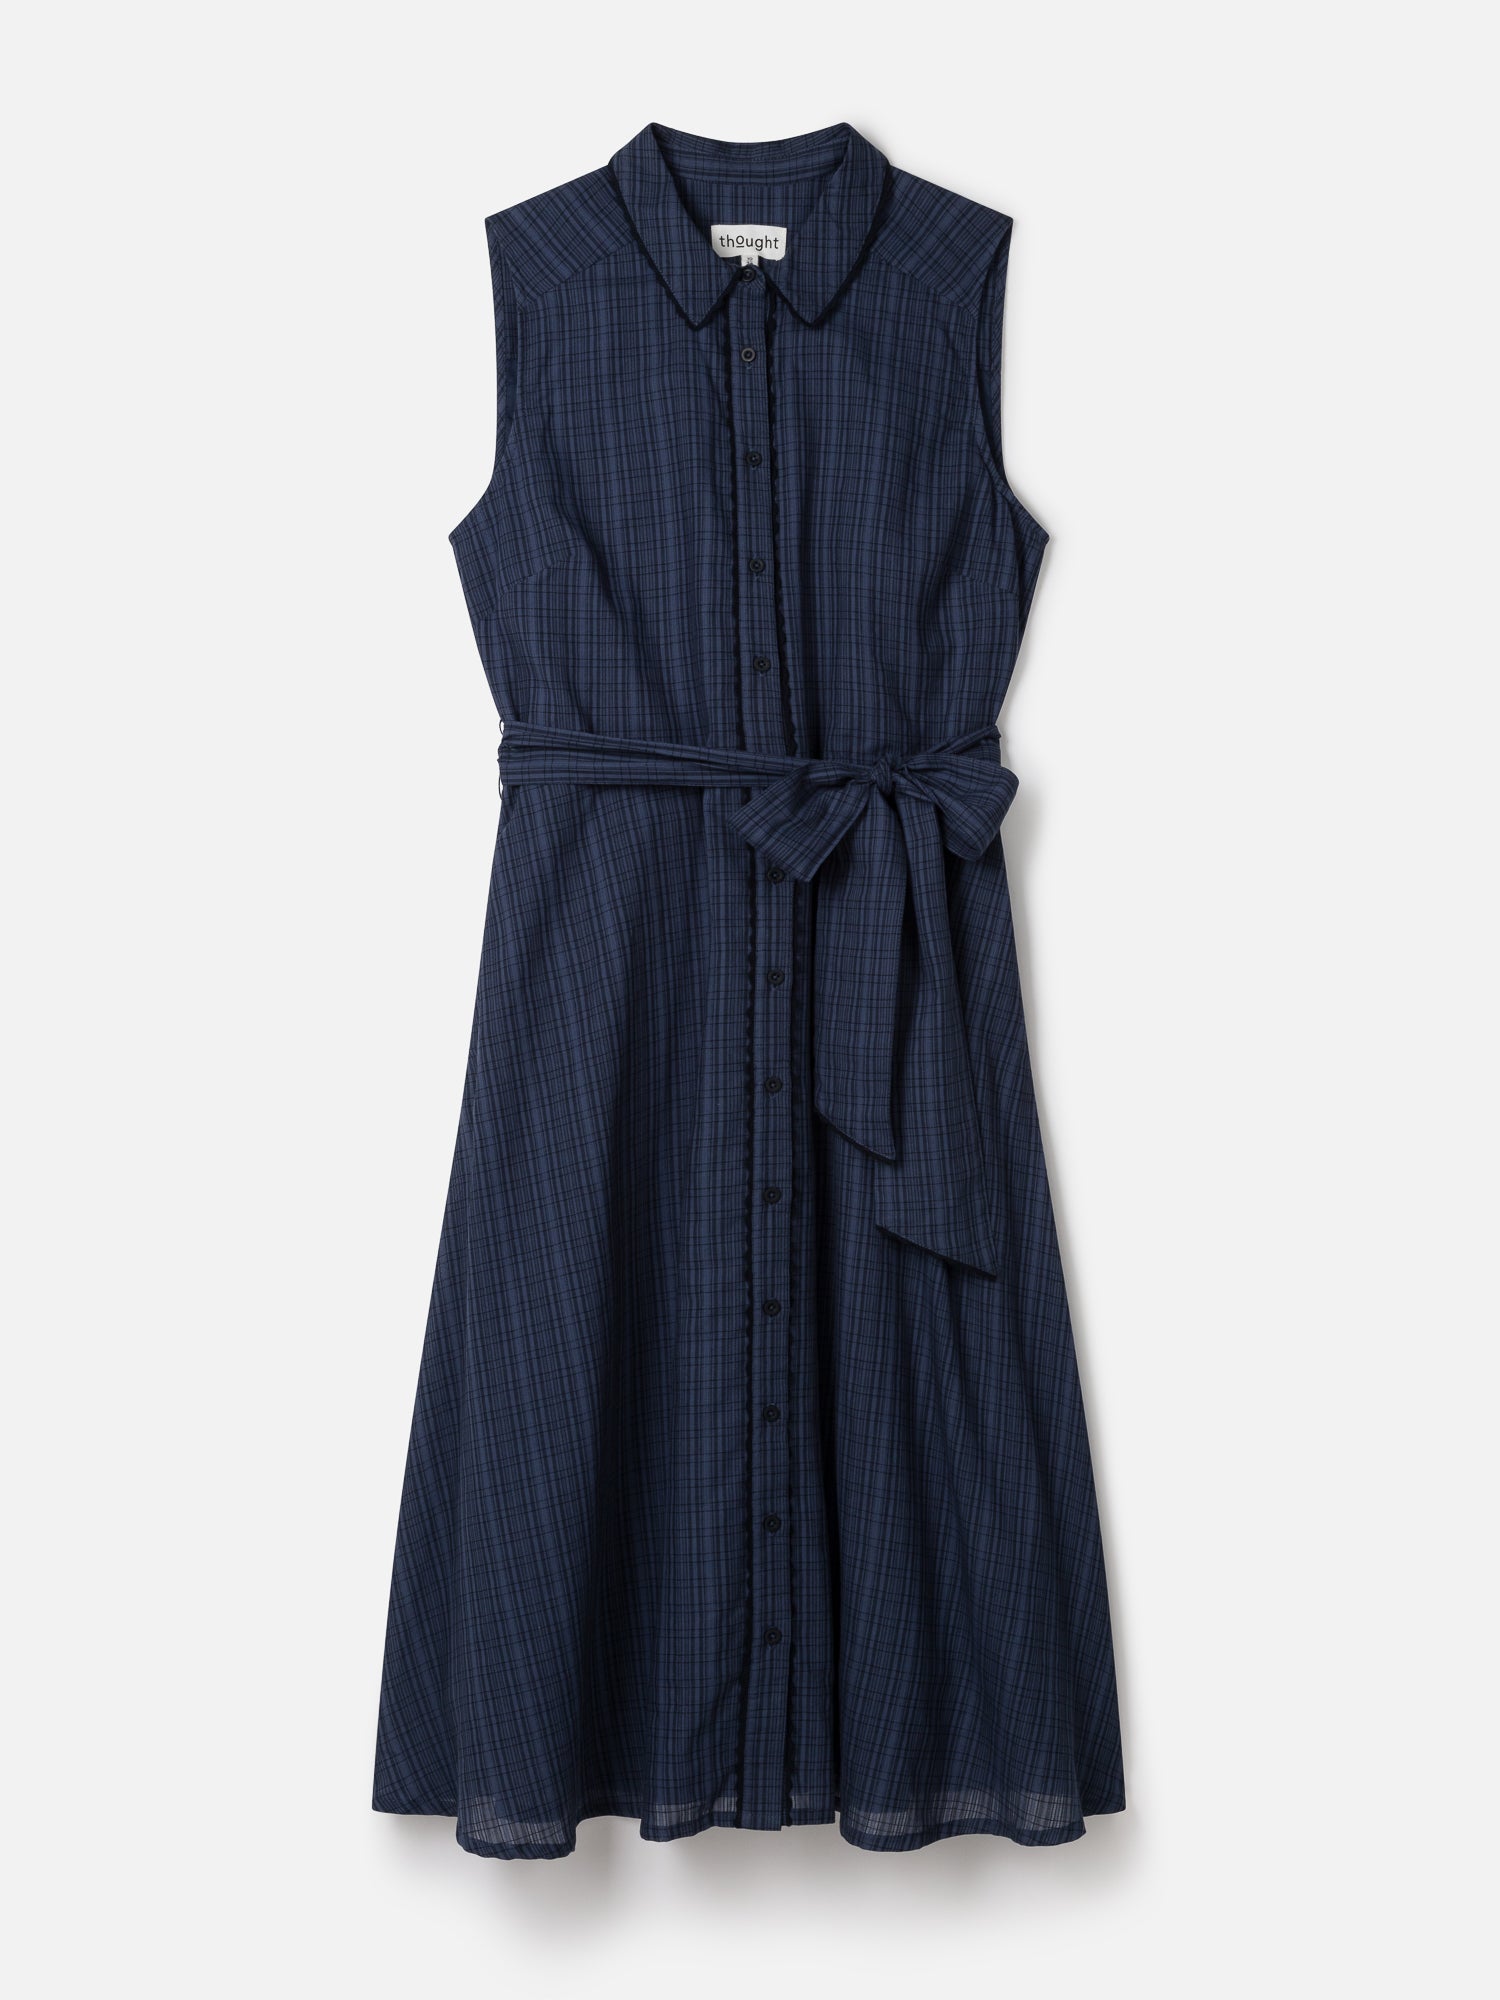 Nona Organic Cotton Sleeveless Shirt Dress - Navy